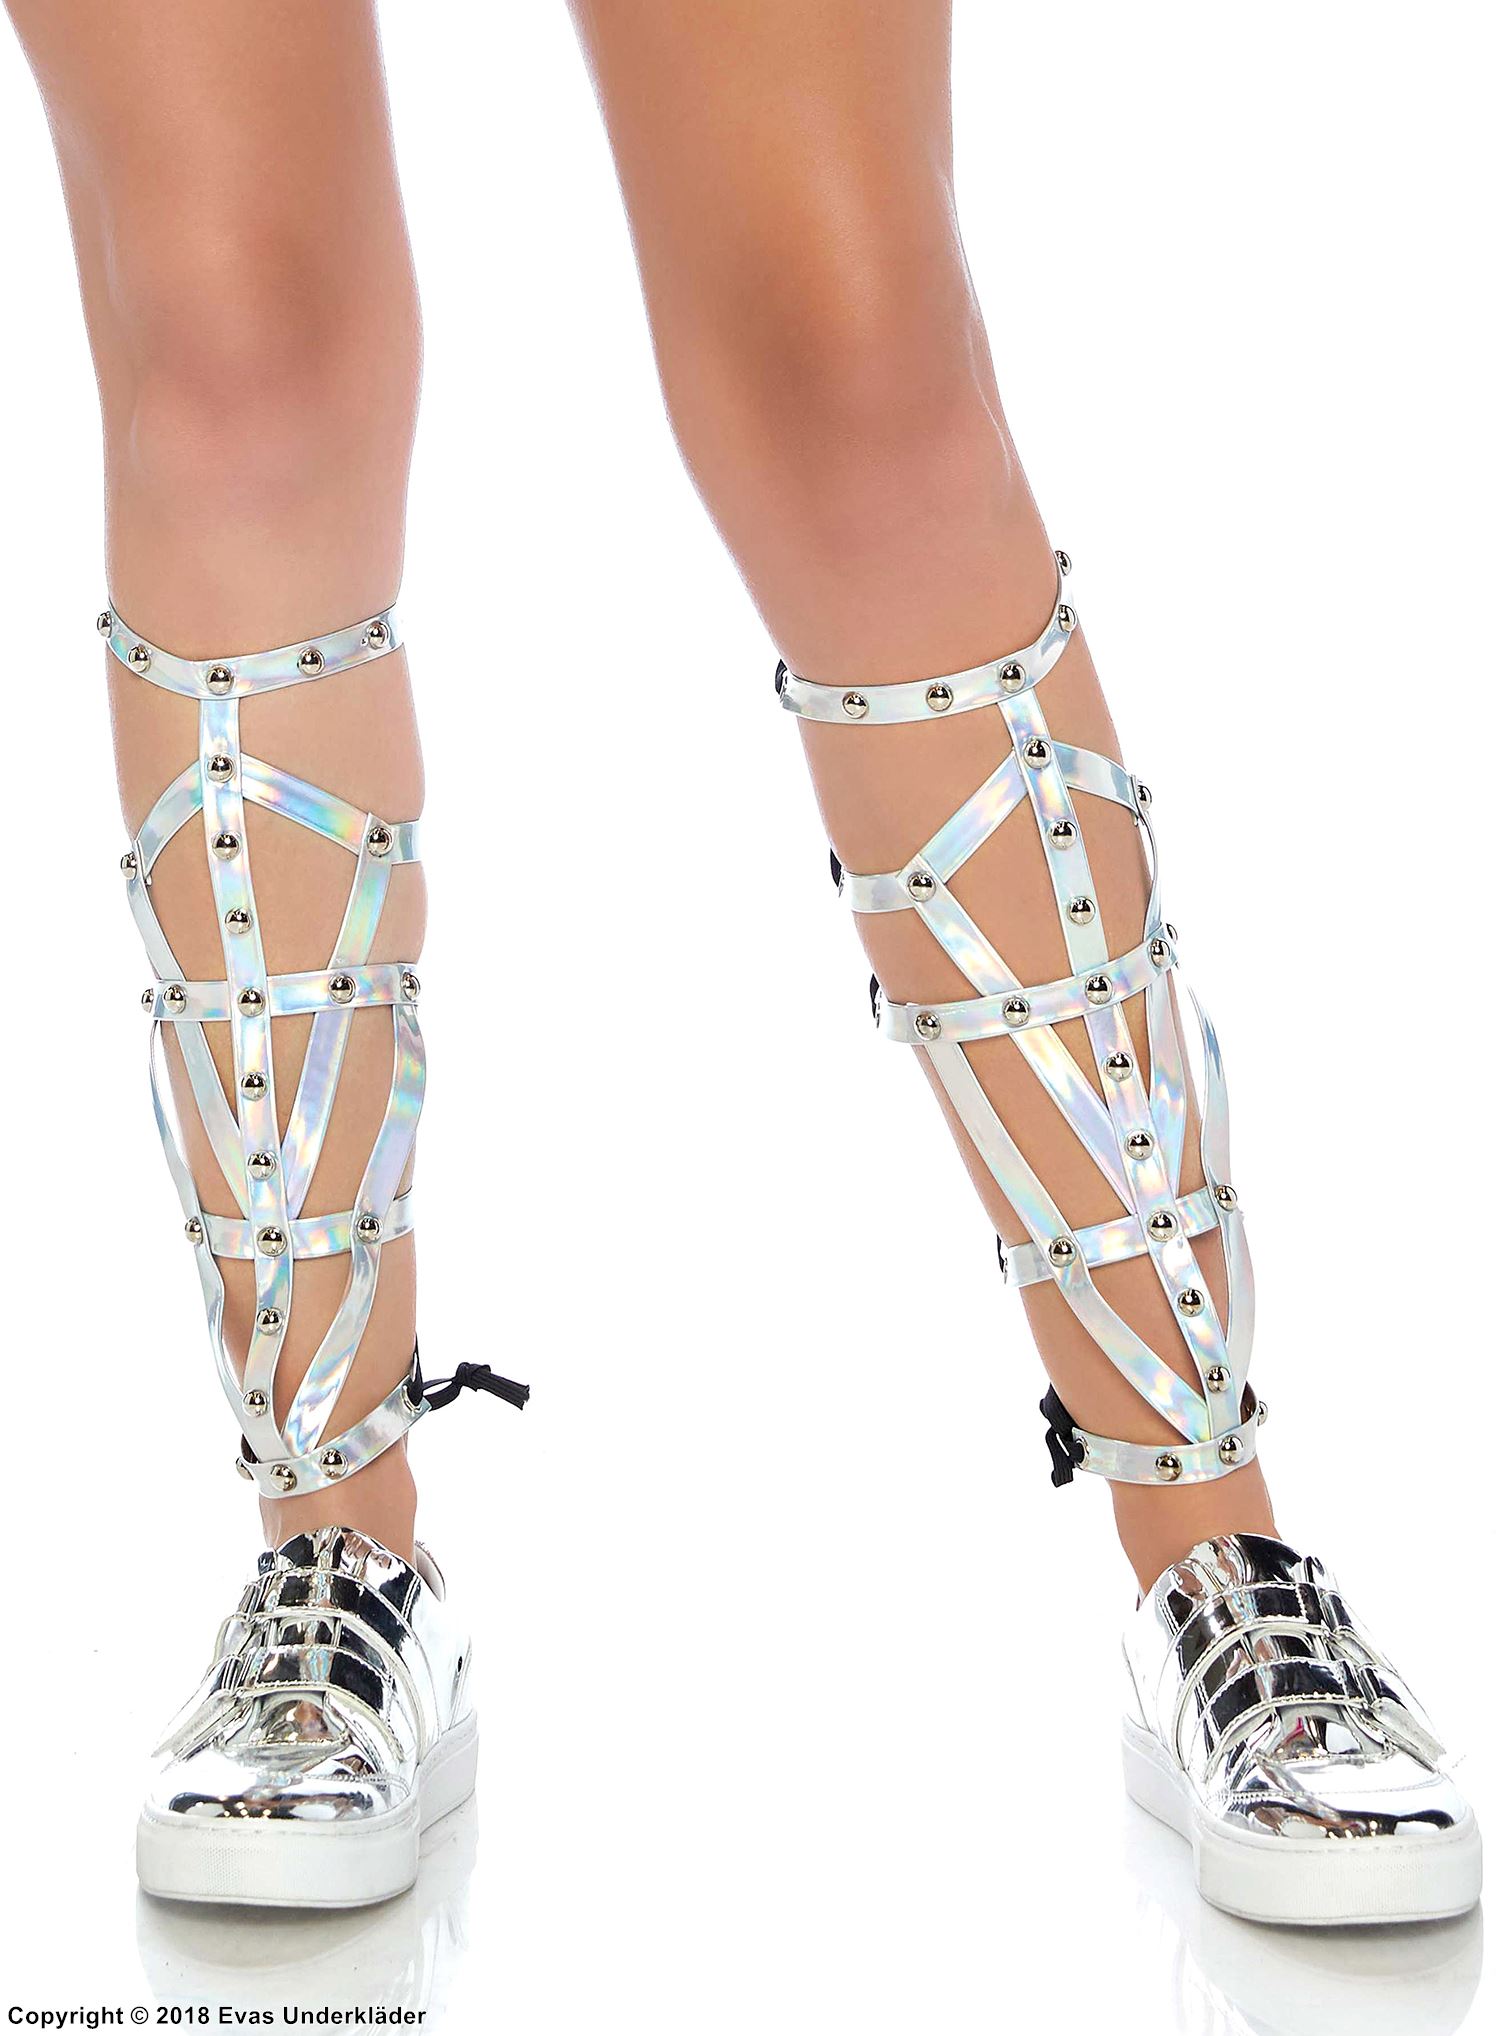 Strap leg wrap, lacing, iridescent fabric, studs, gladiator style